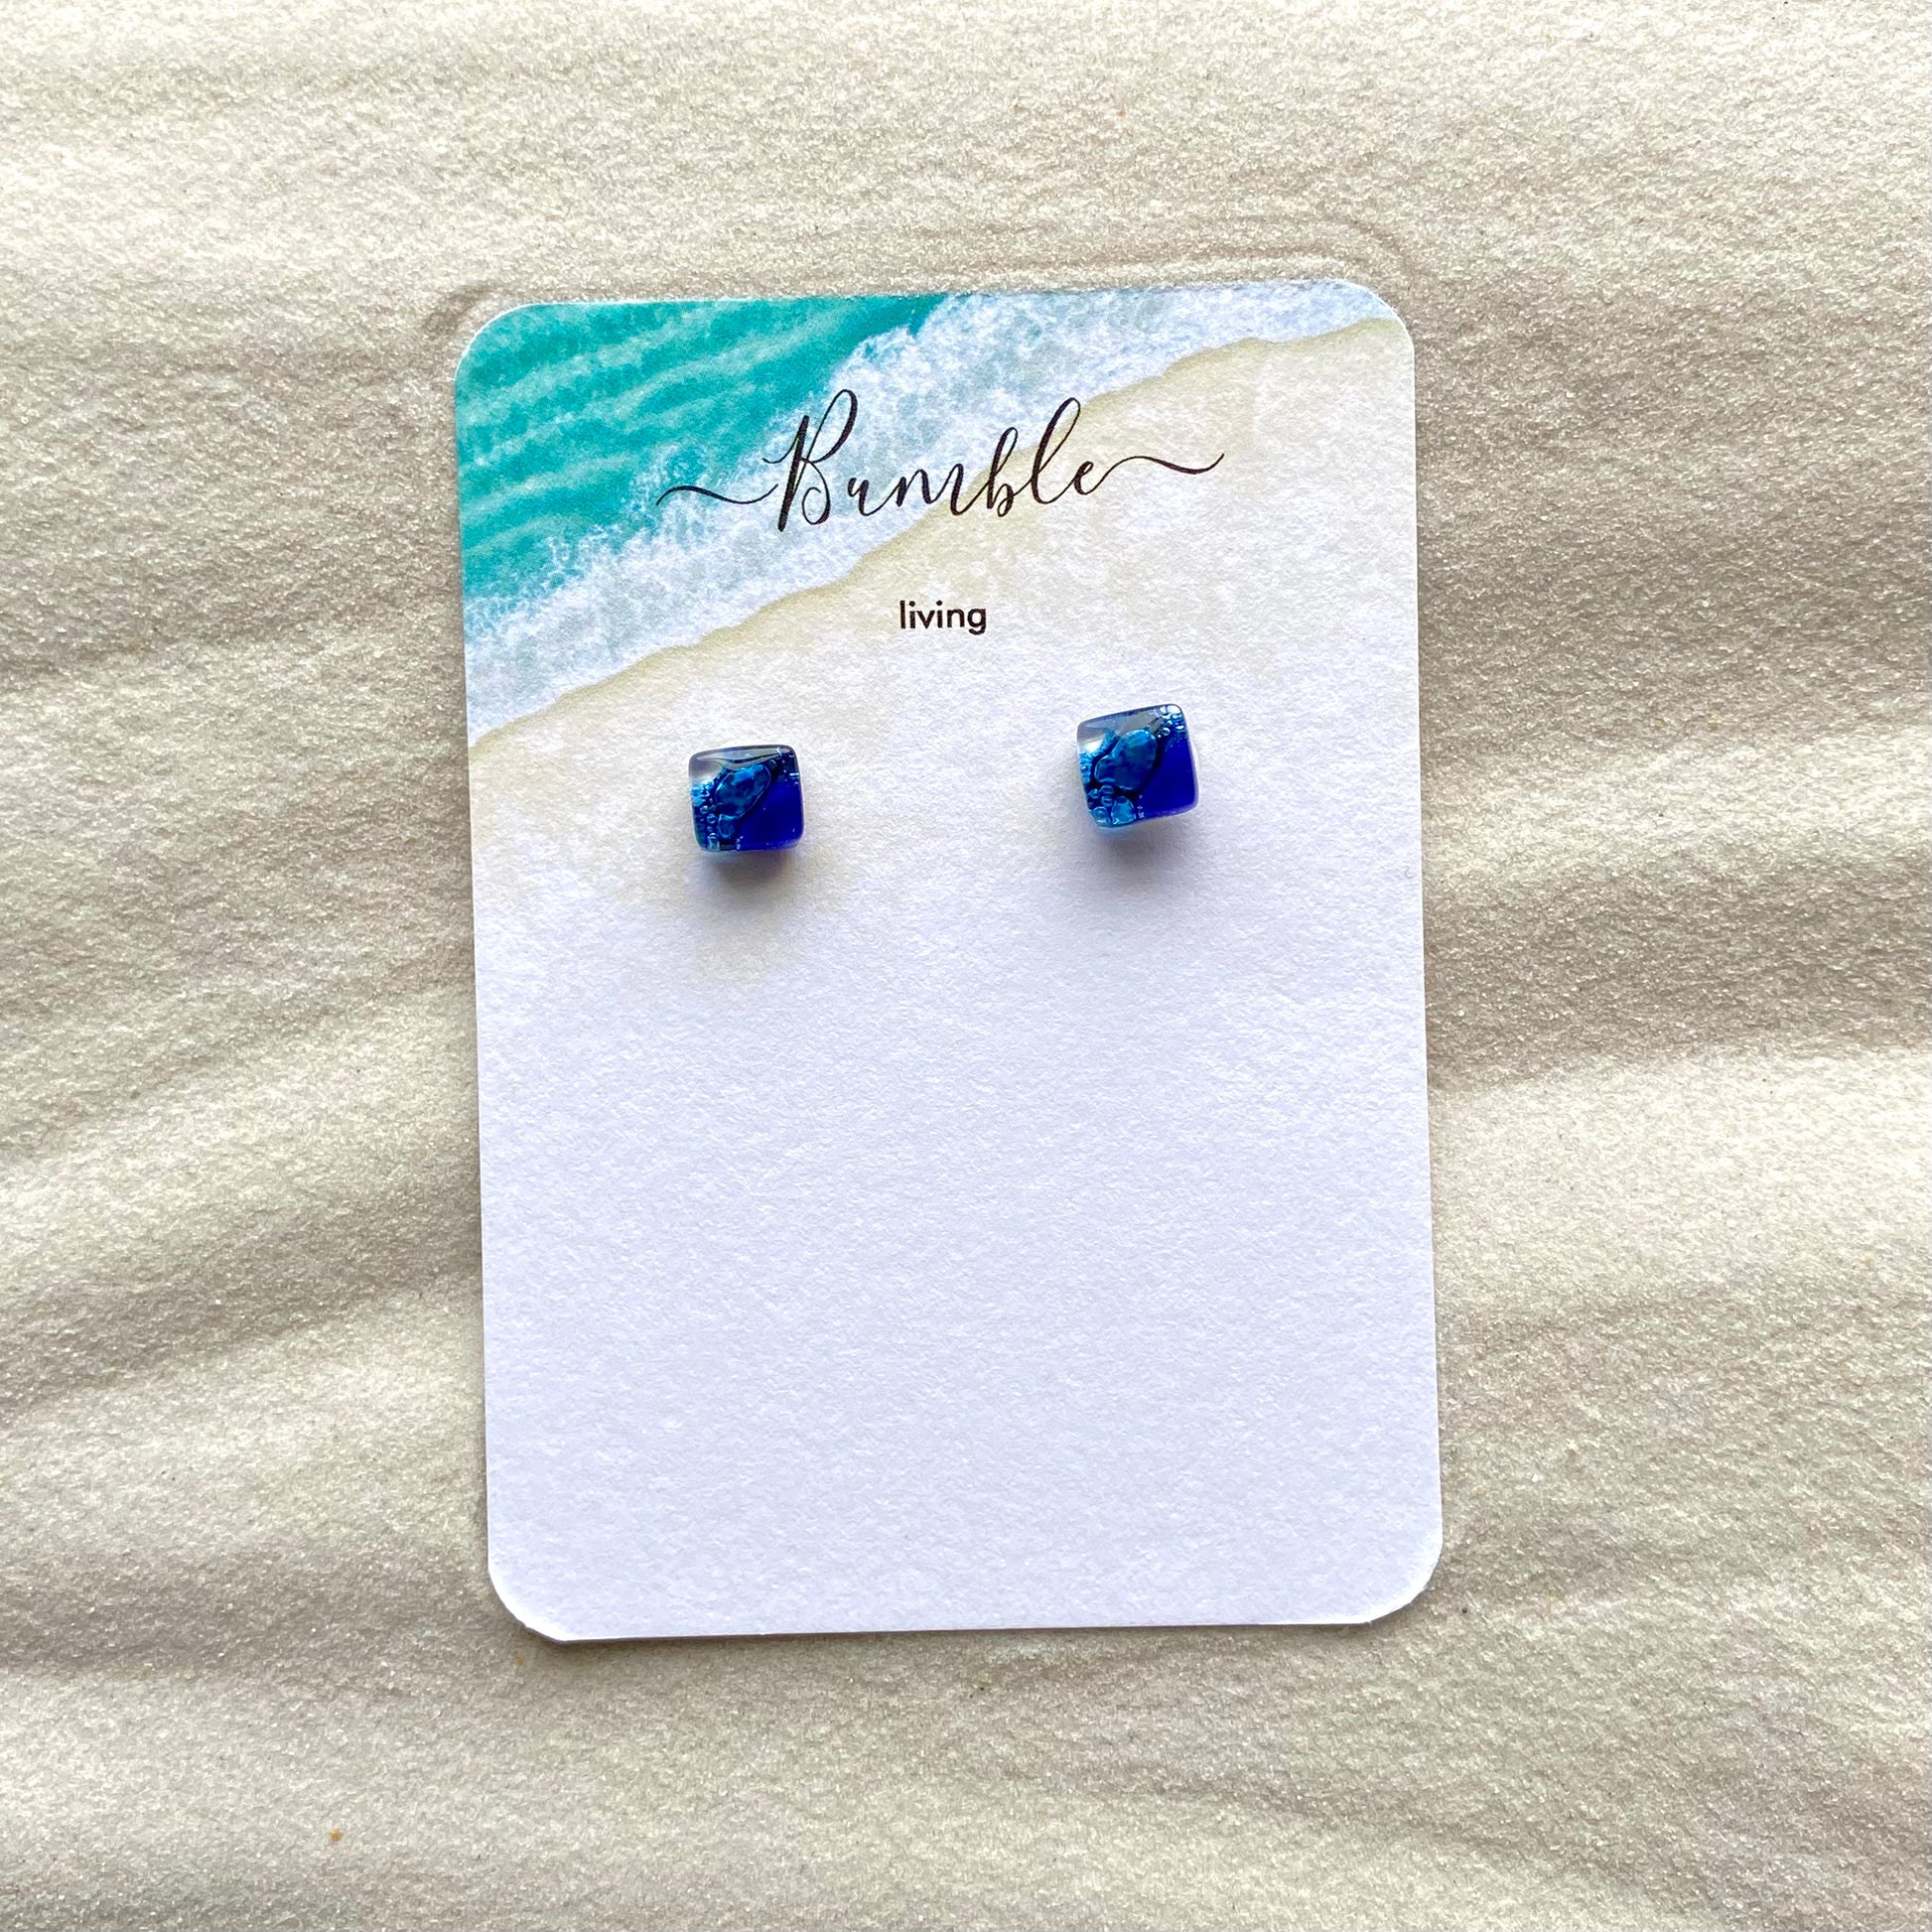 Violet Blue & White Medium Stud Earrings - Bumble Living